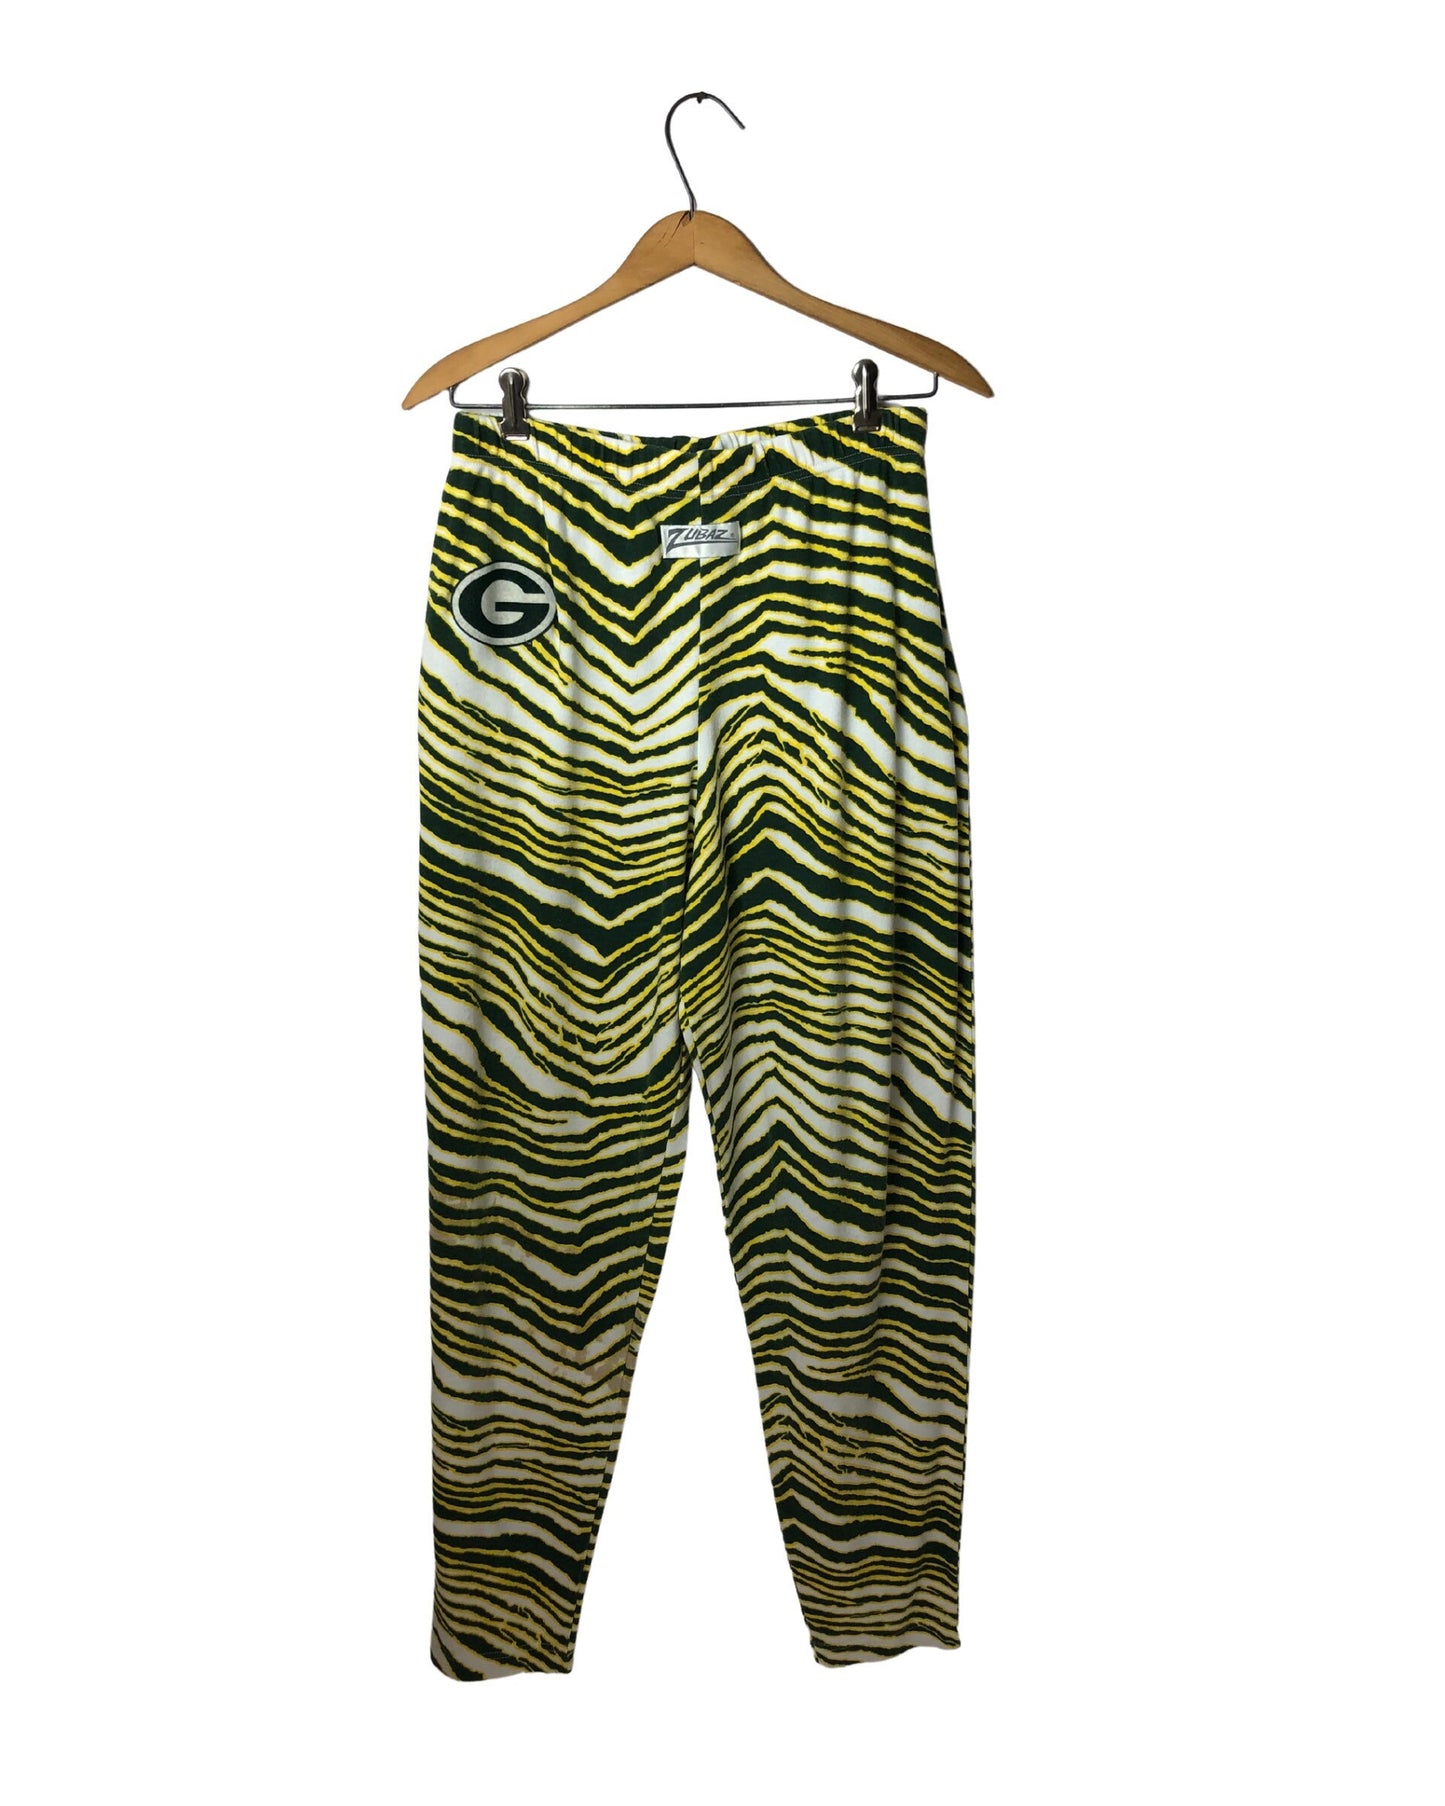 90’s Green Bay Packers Zubaz Zebra Print Sweatpants Size Large